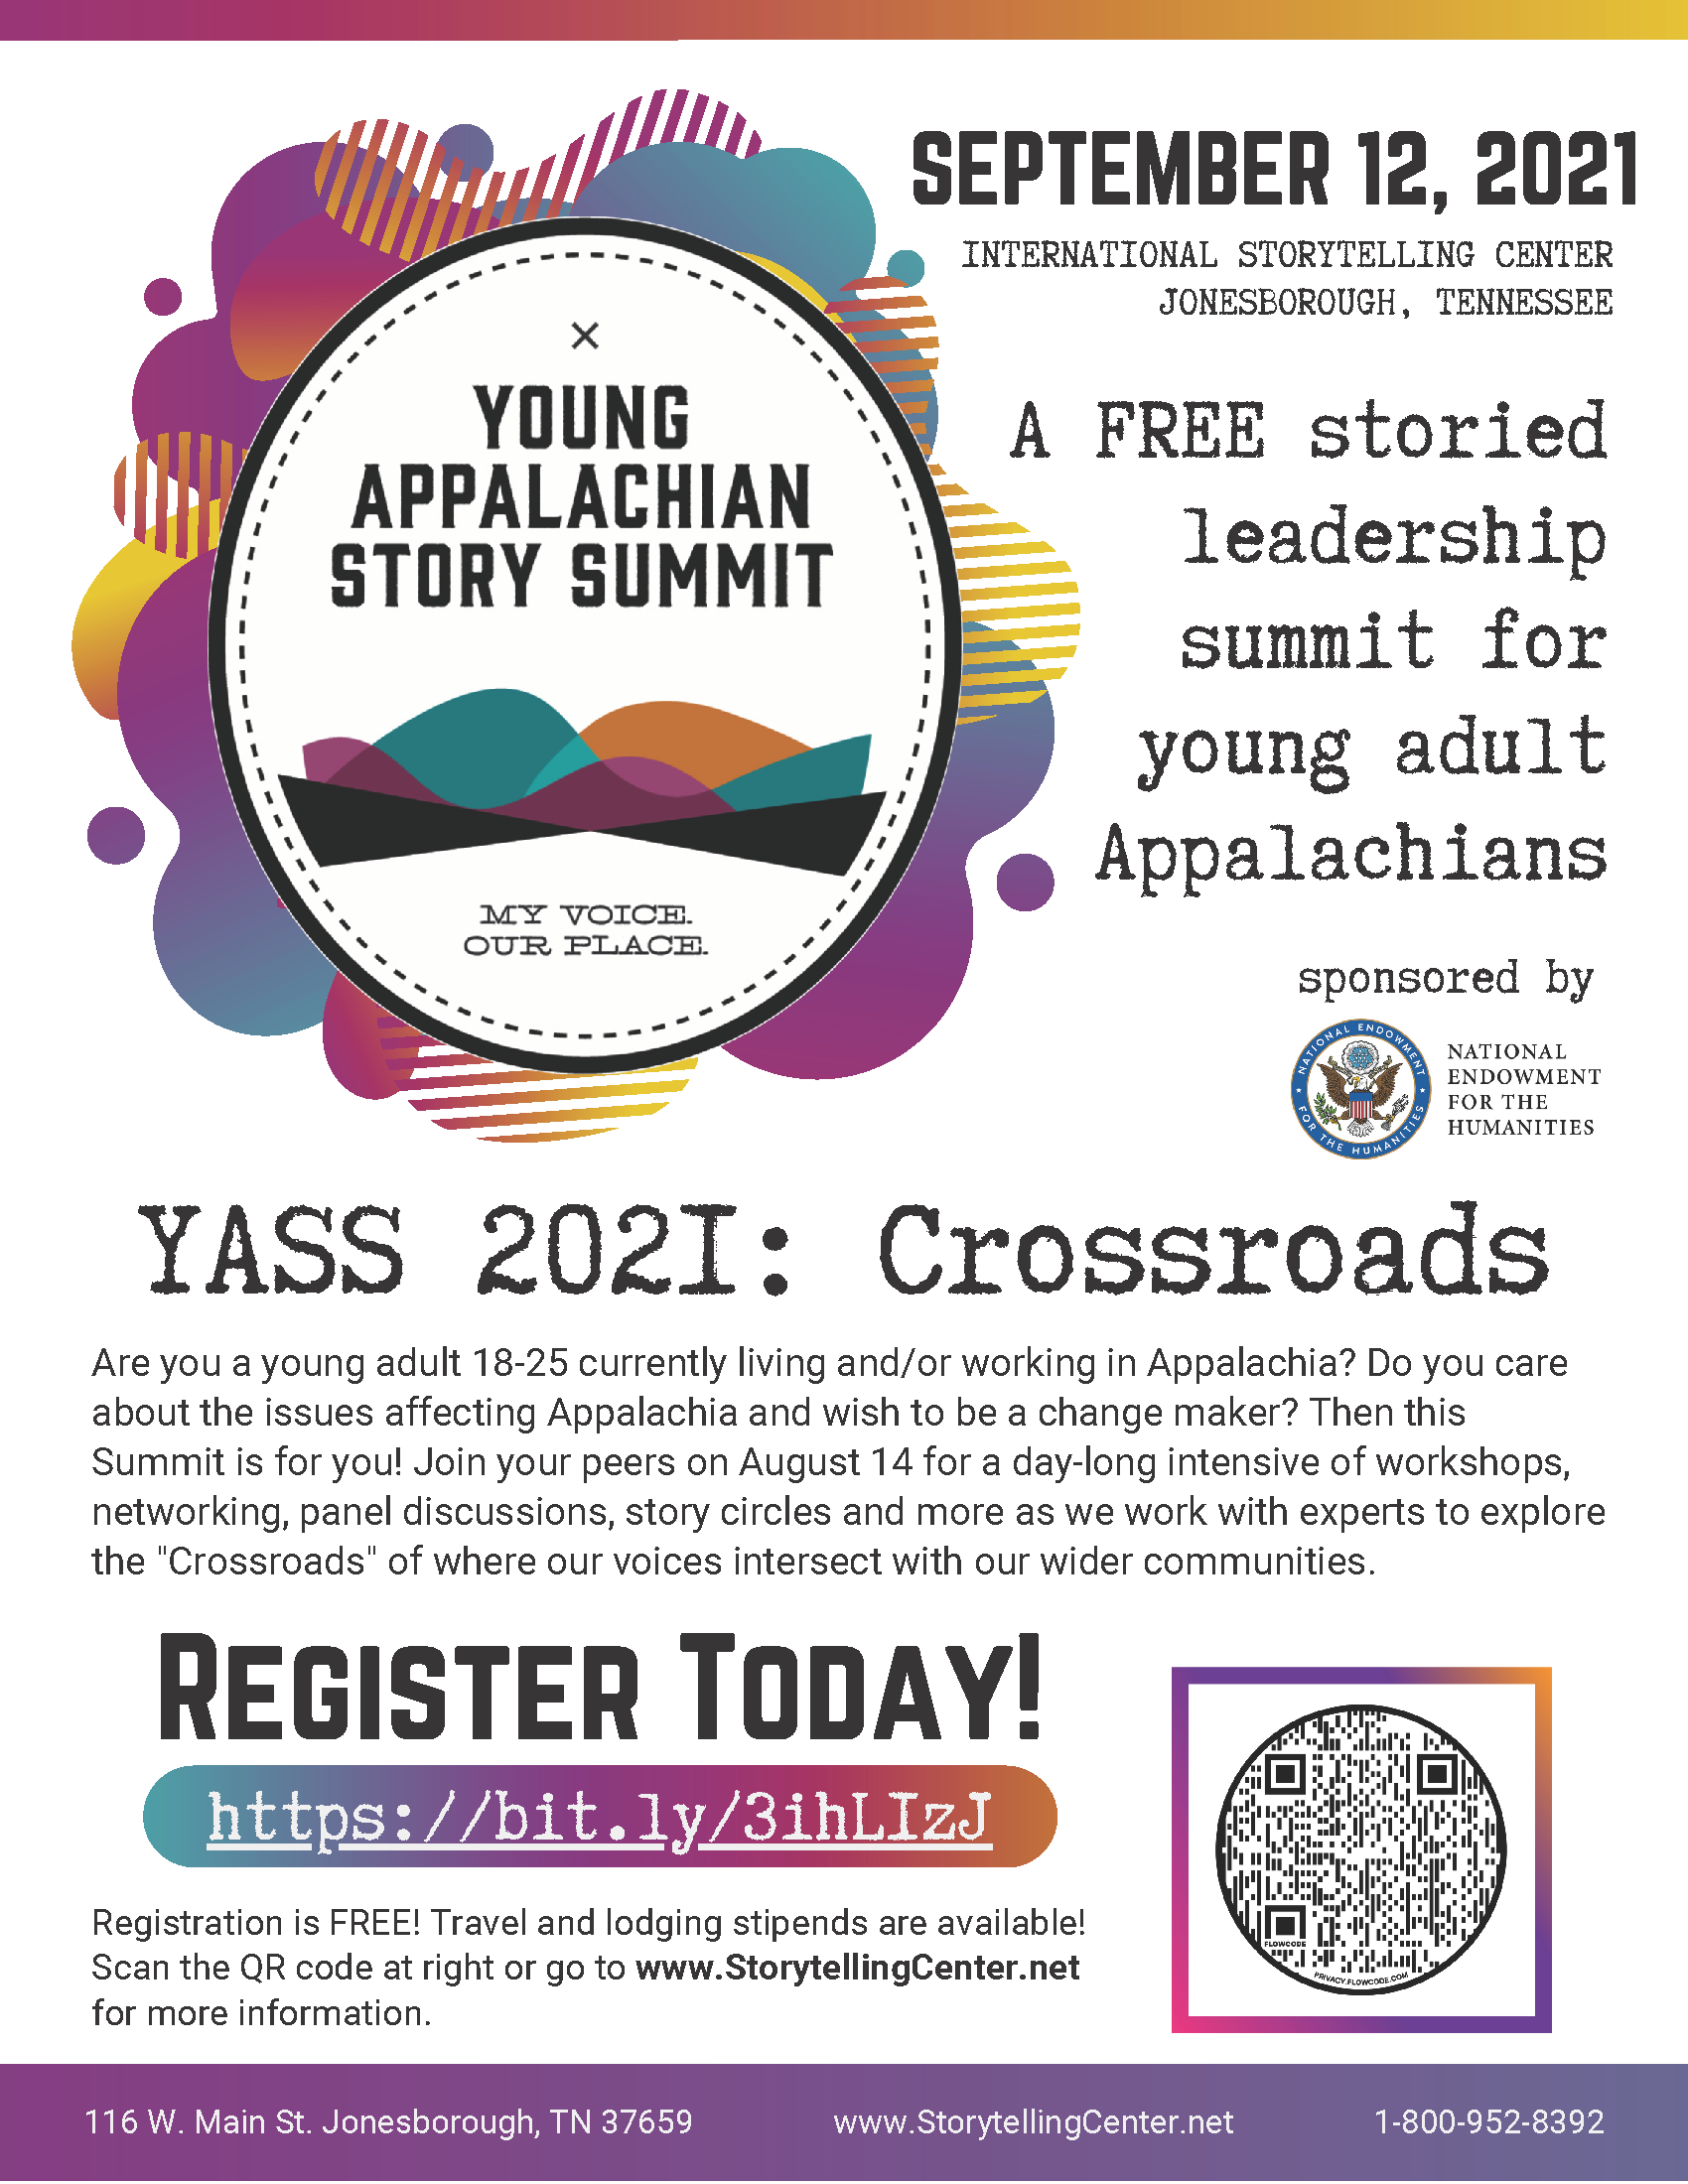 YASS Registration Information